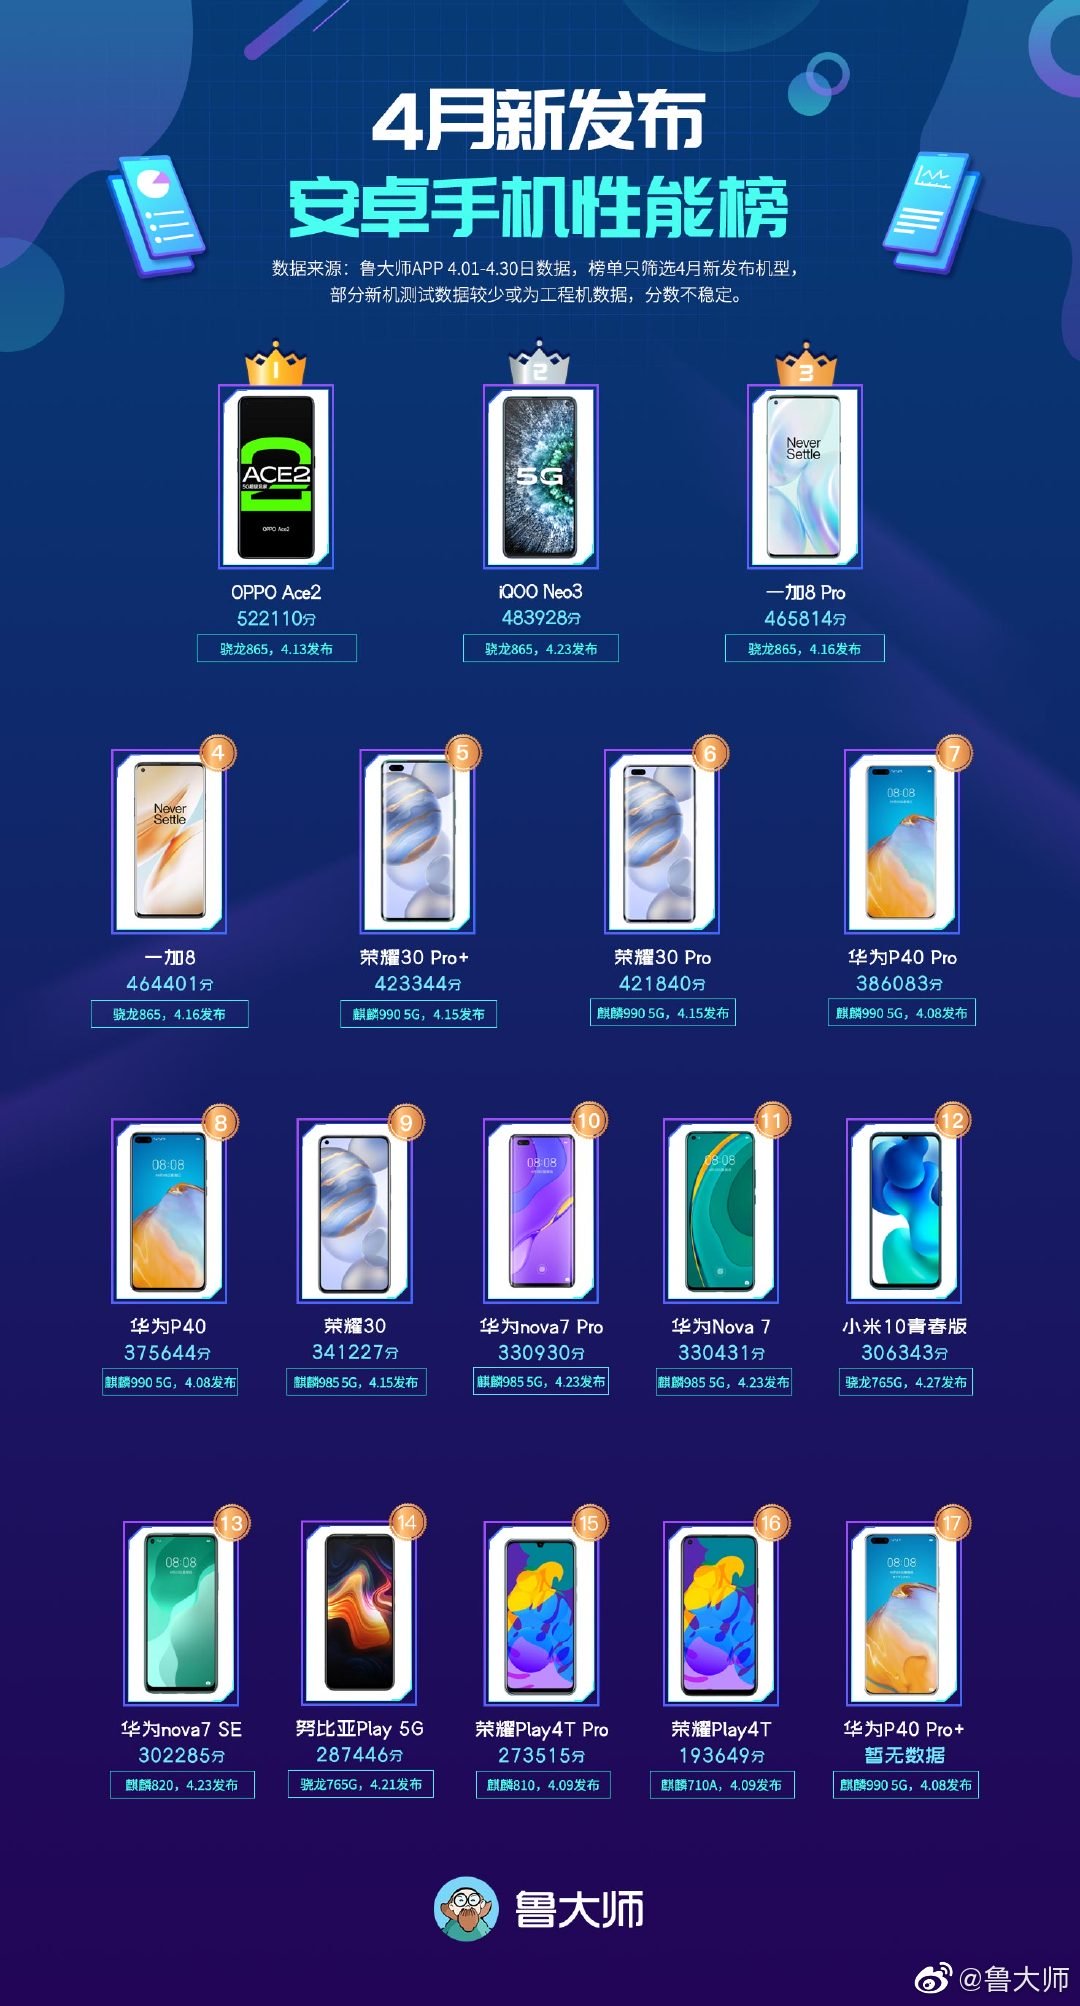 Master Lu's best performing smartphones list for April revealed